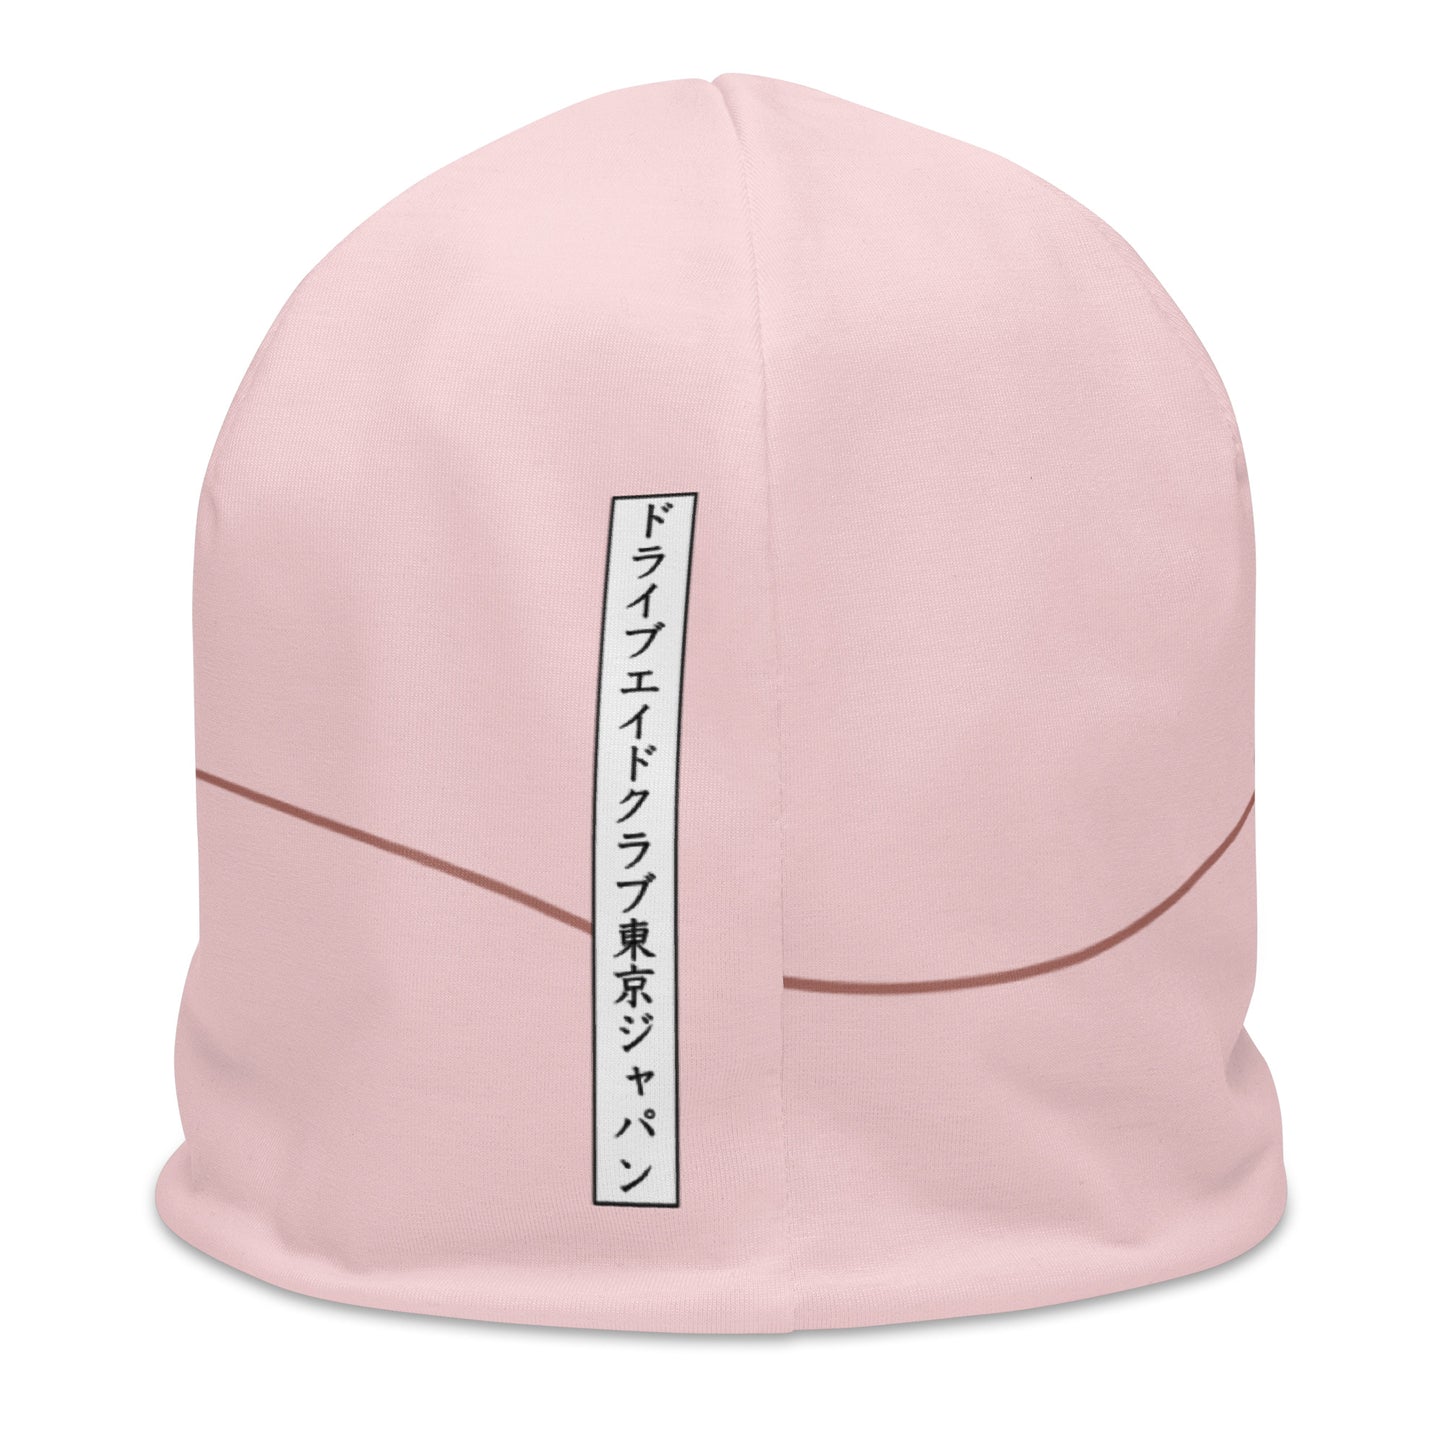 Cherry Blossom Beanie hat - Pink